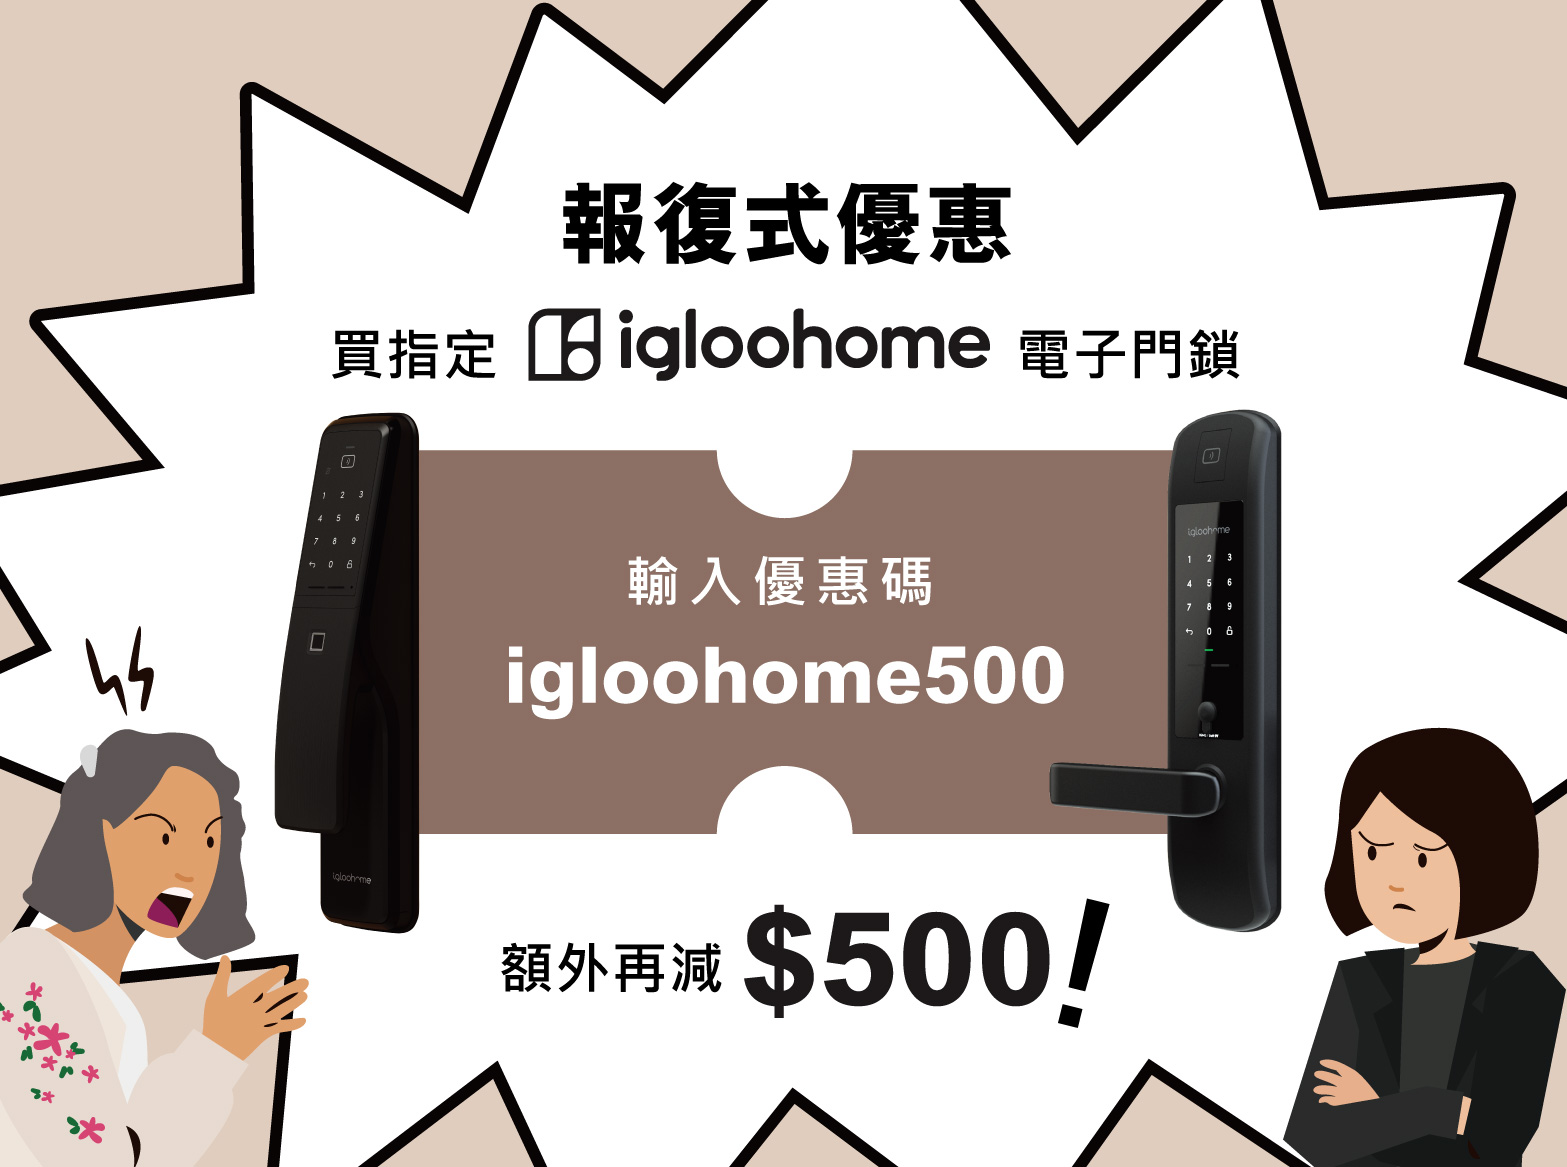 PLC eshop x igloohome Exclusive Offer 